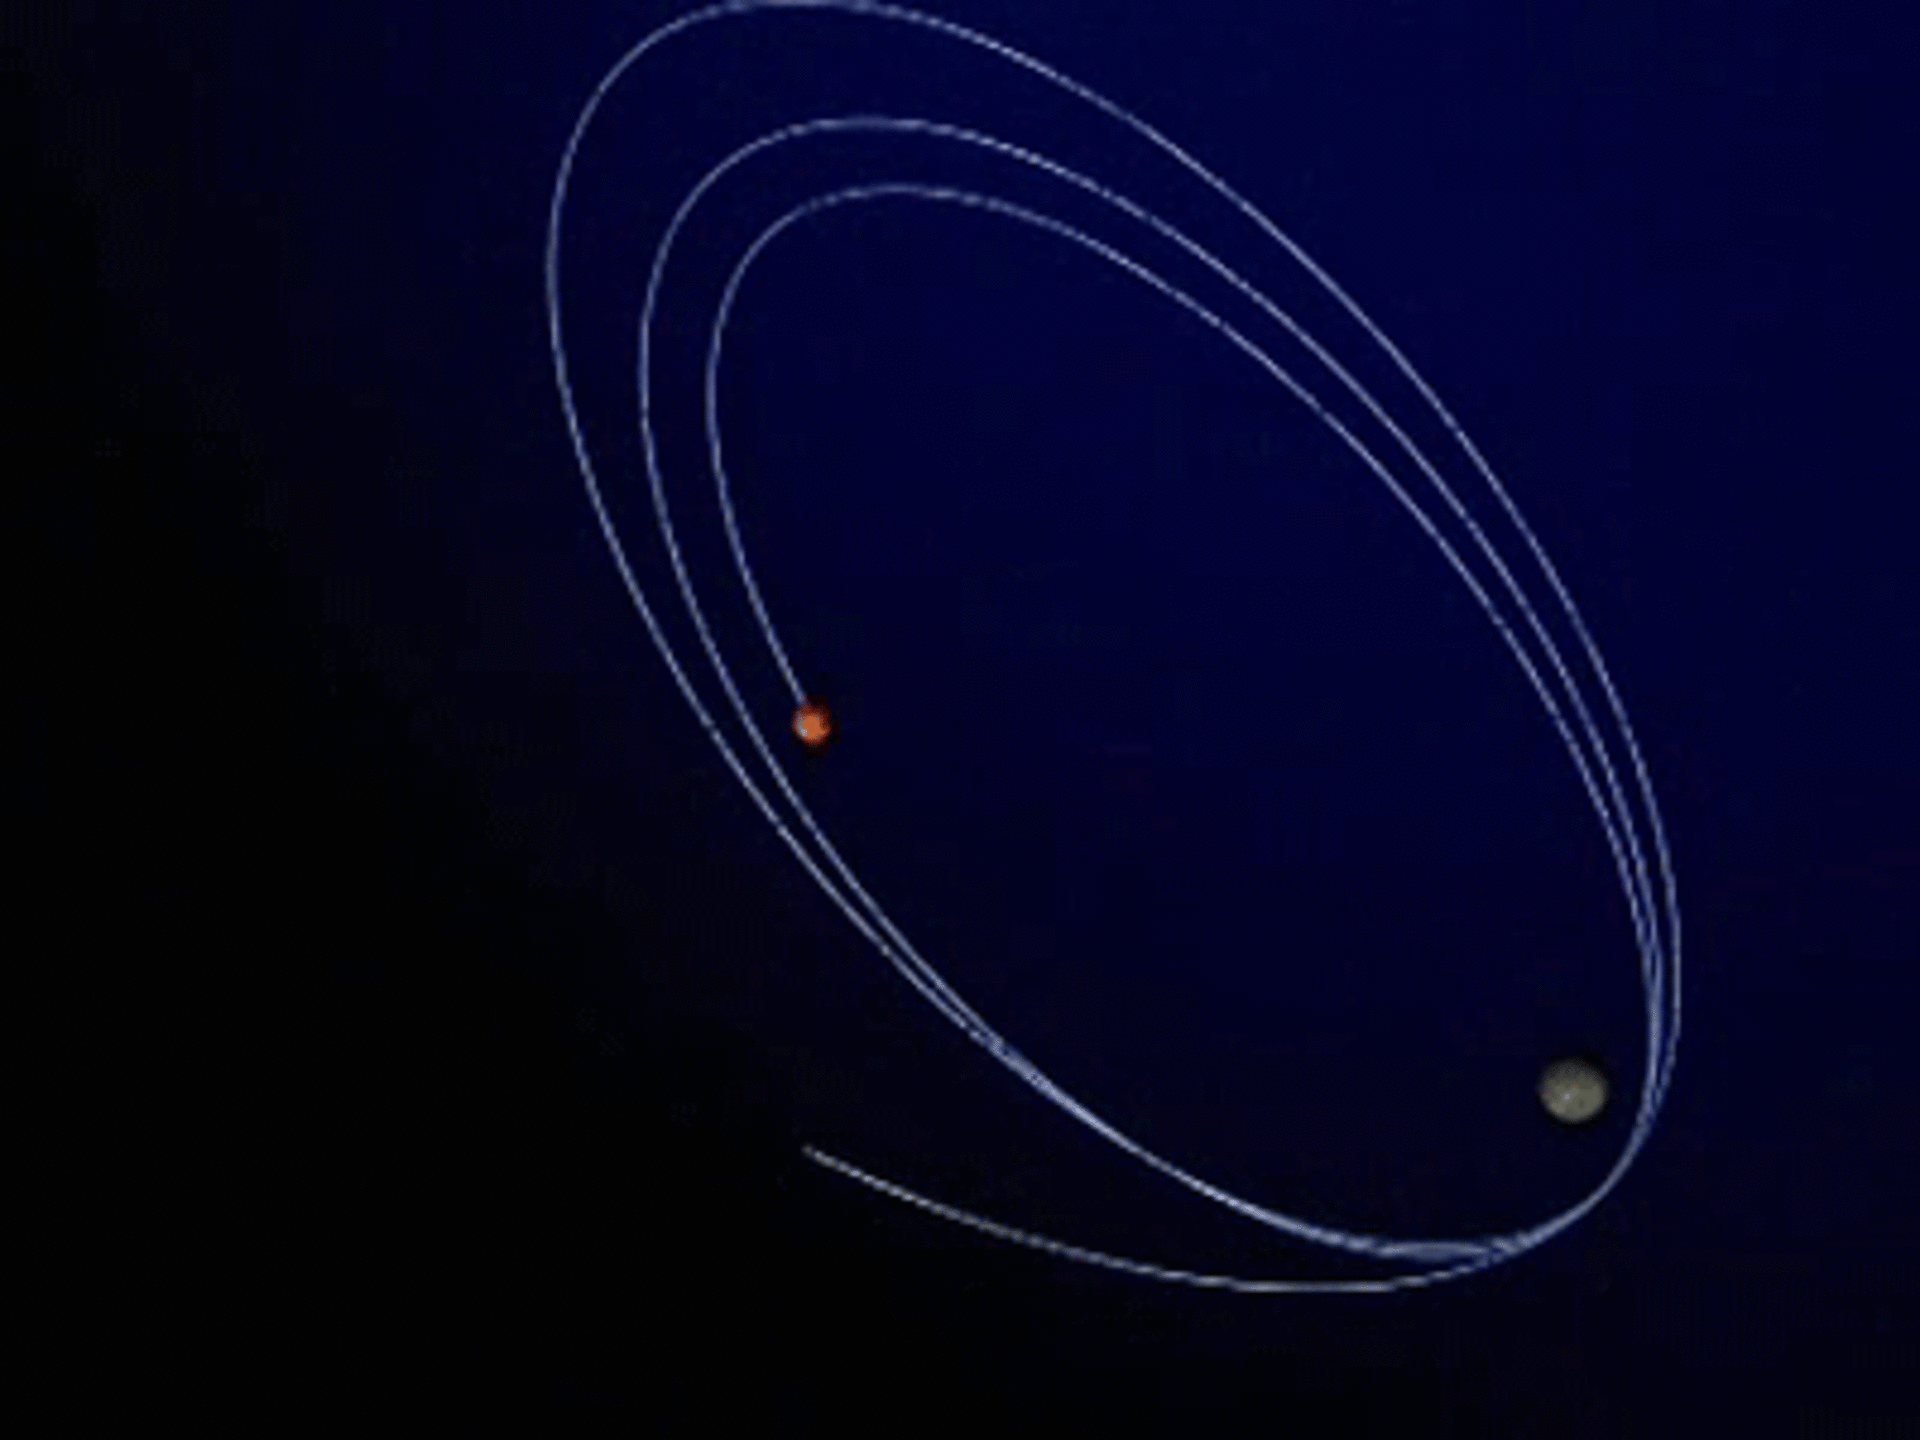 SMART-1’s orbits around the Moon